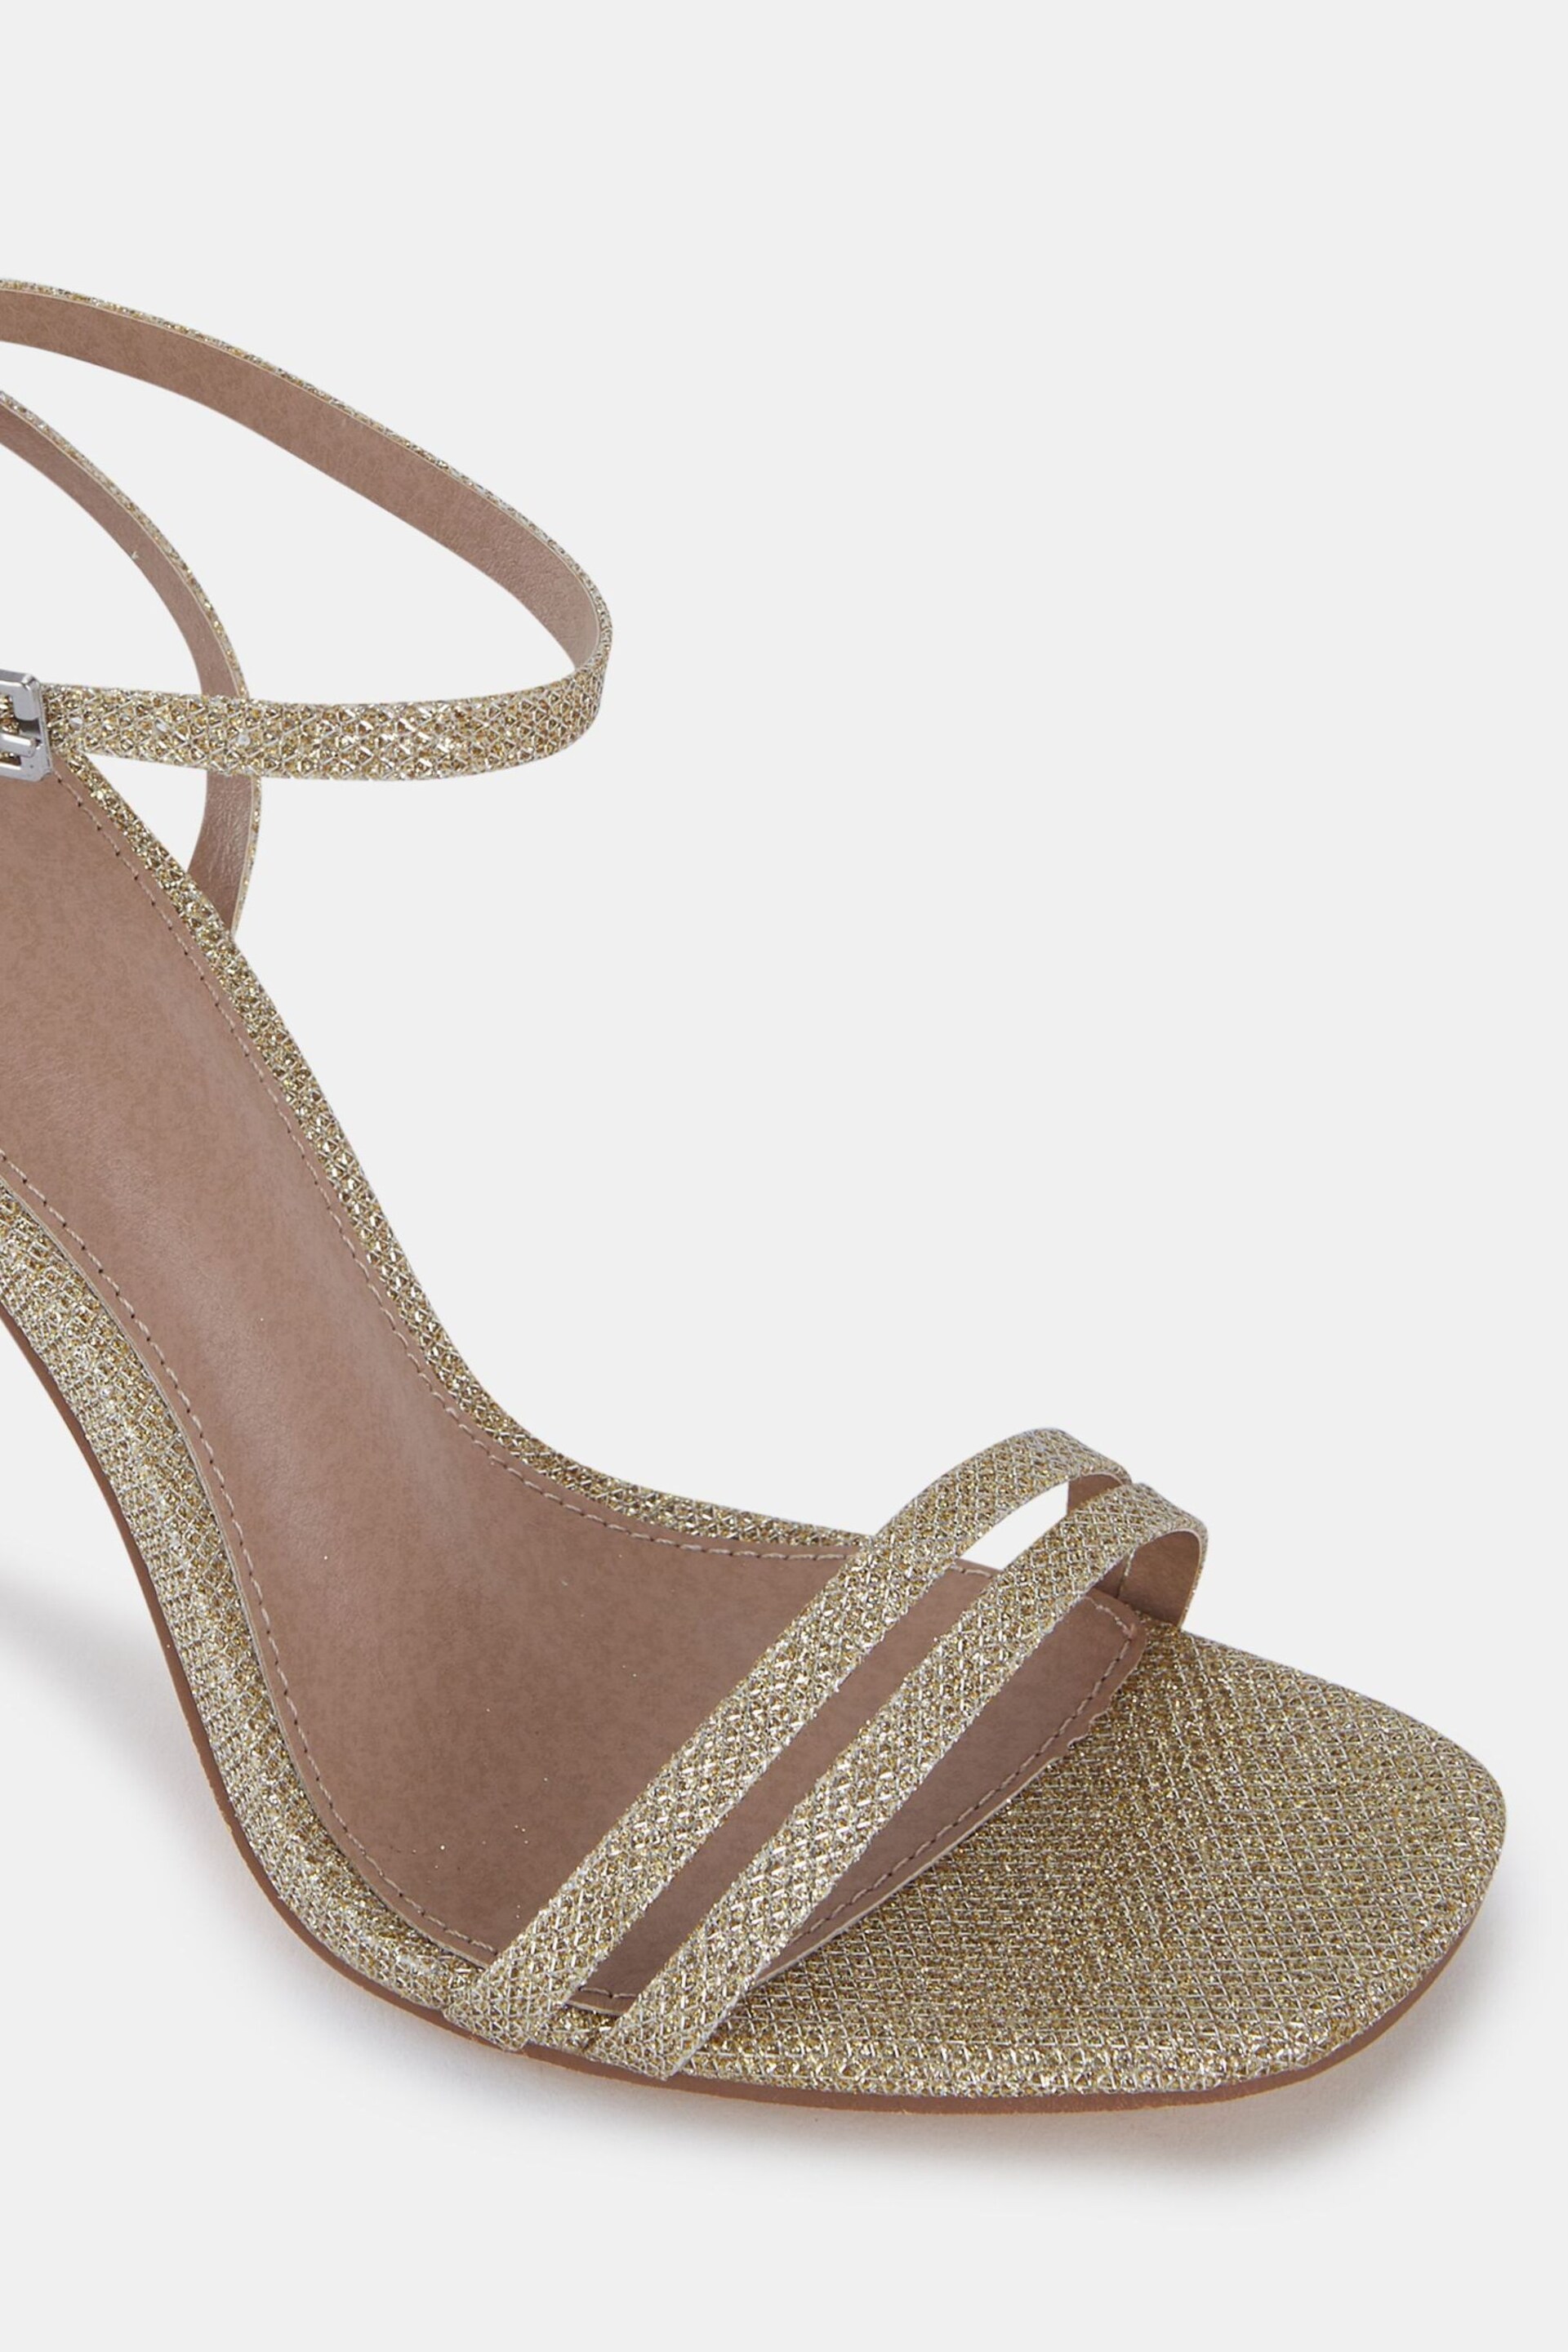 Novo Gold Wide Fit McKenna Strappy Heeled Sandals - Image 6 of 6